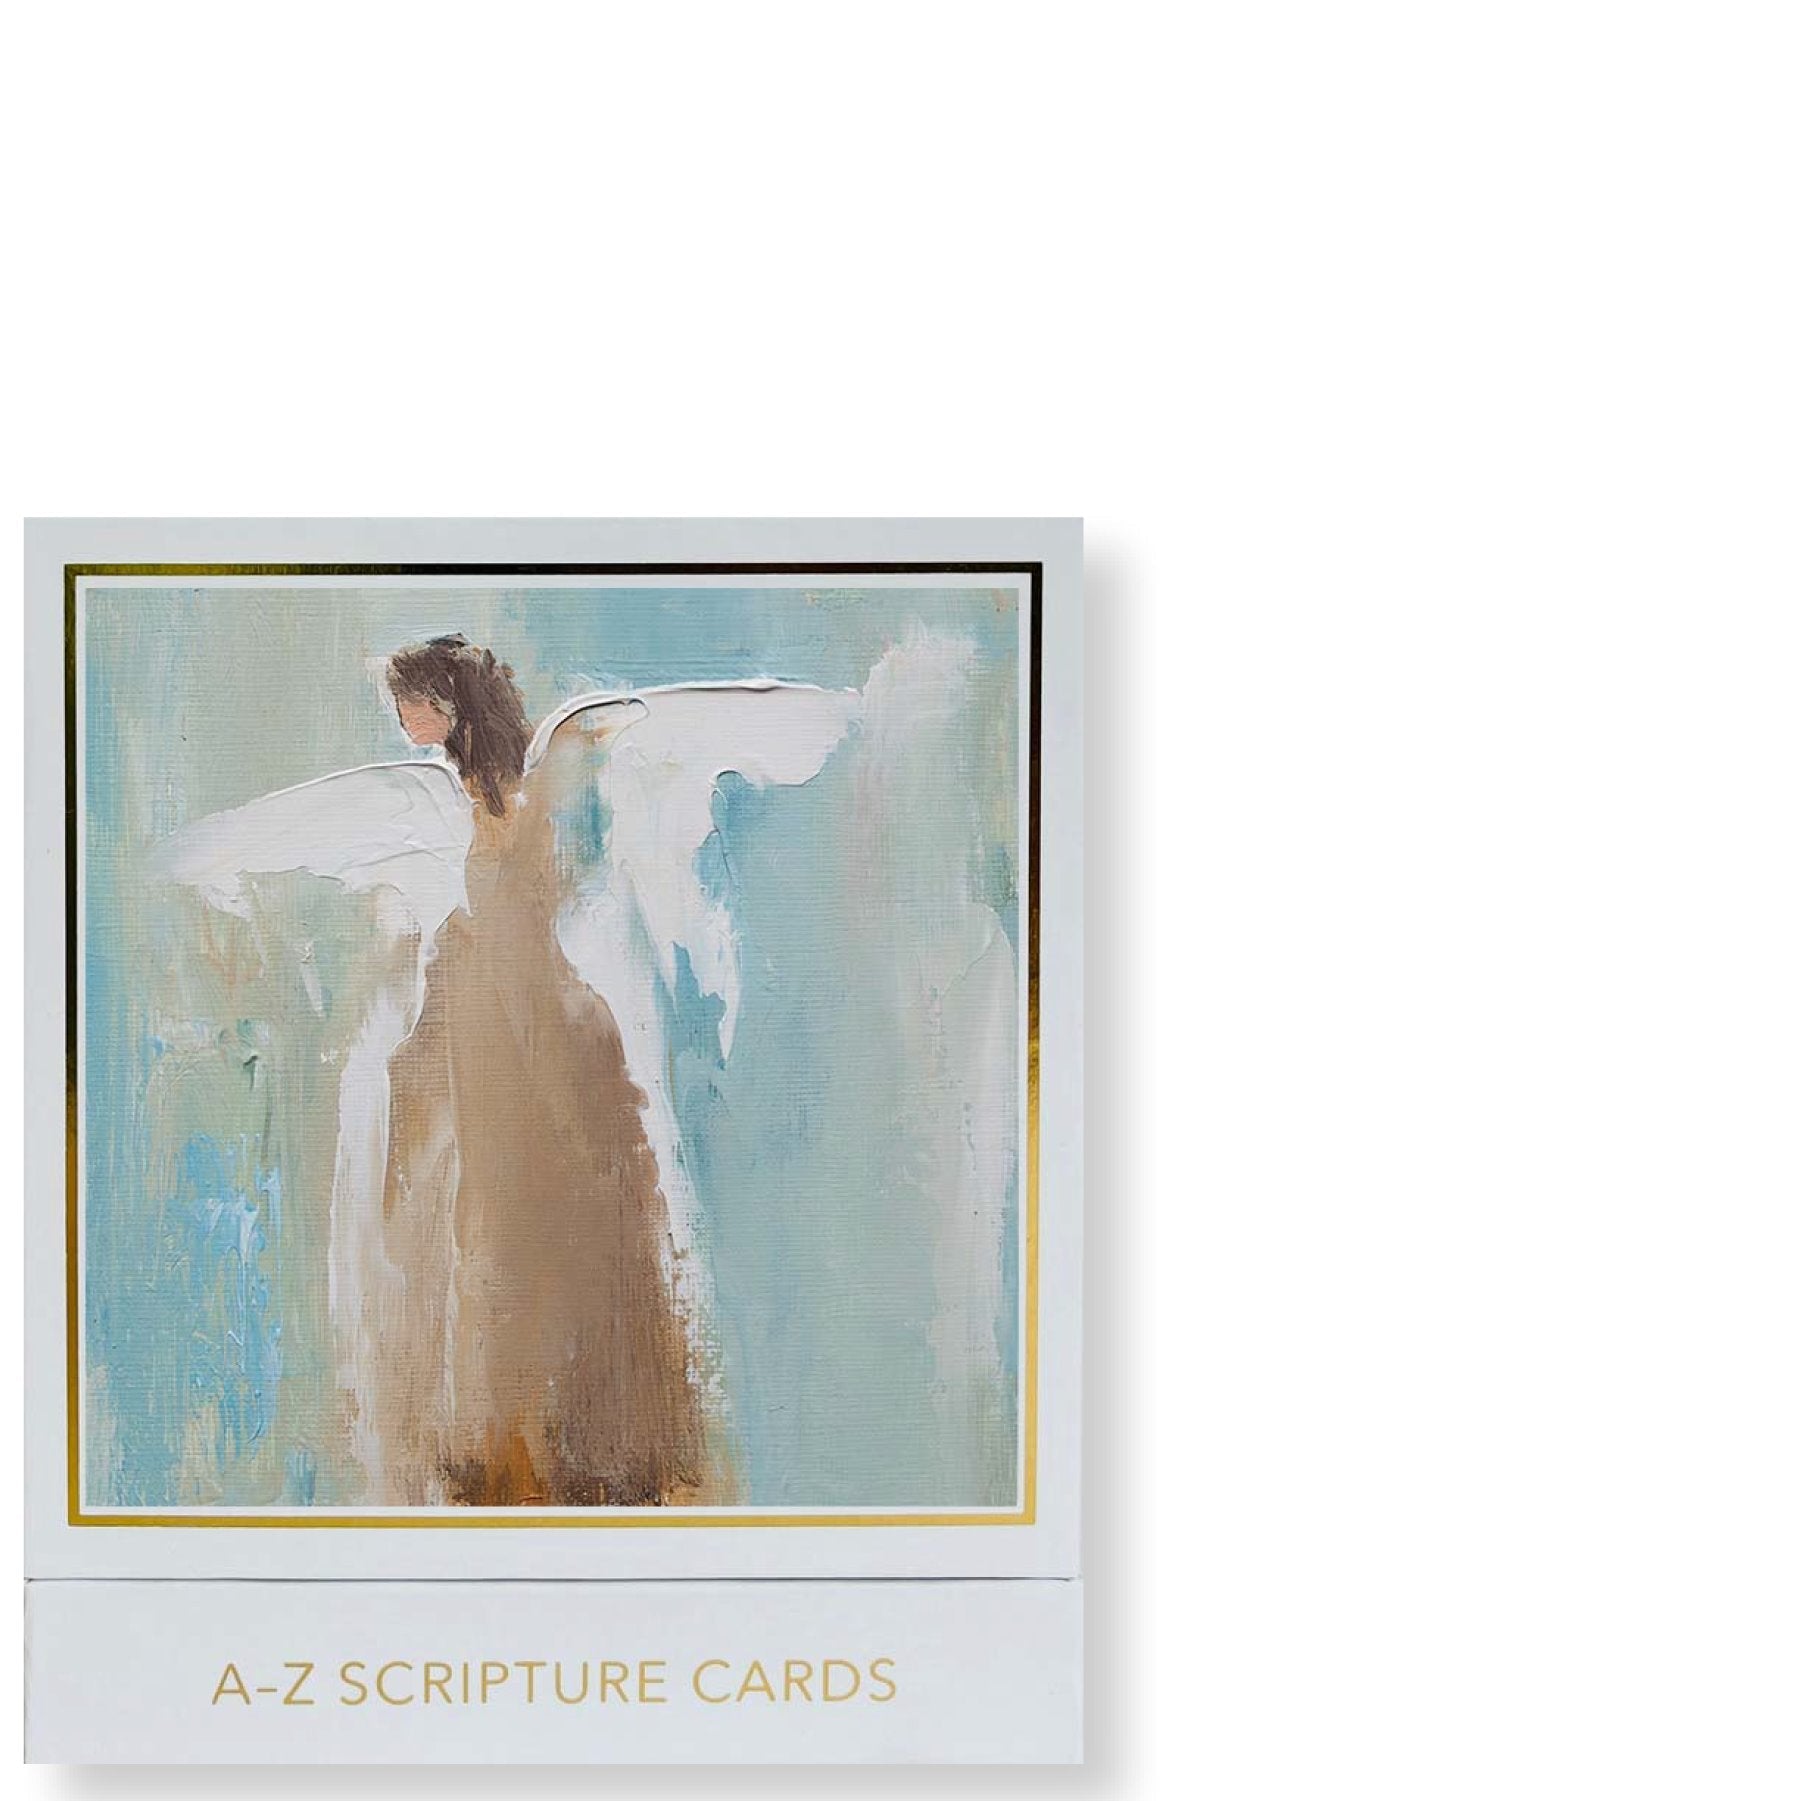 A-Z Scripture Cards